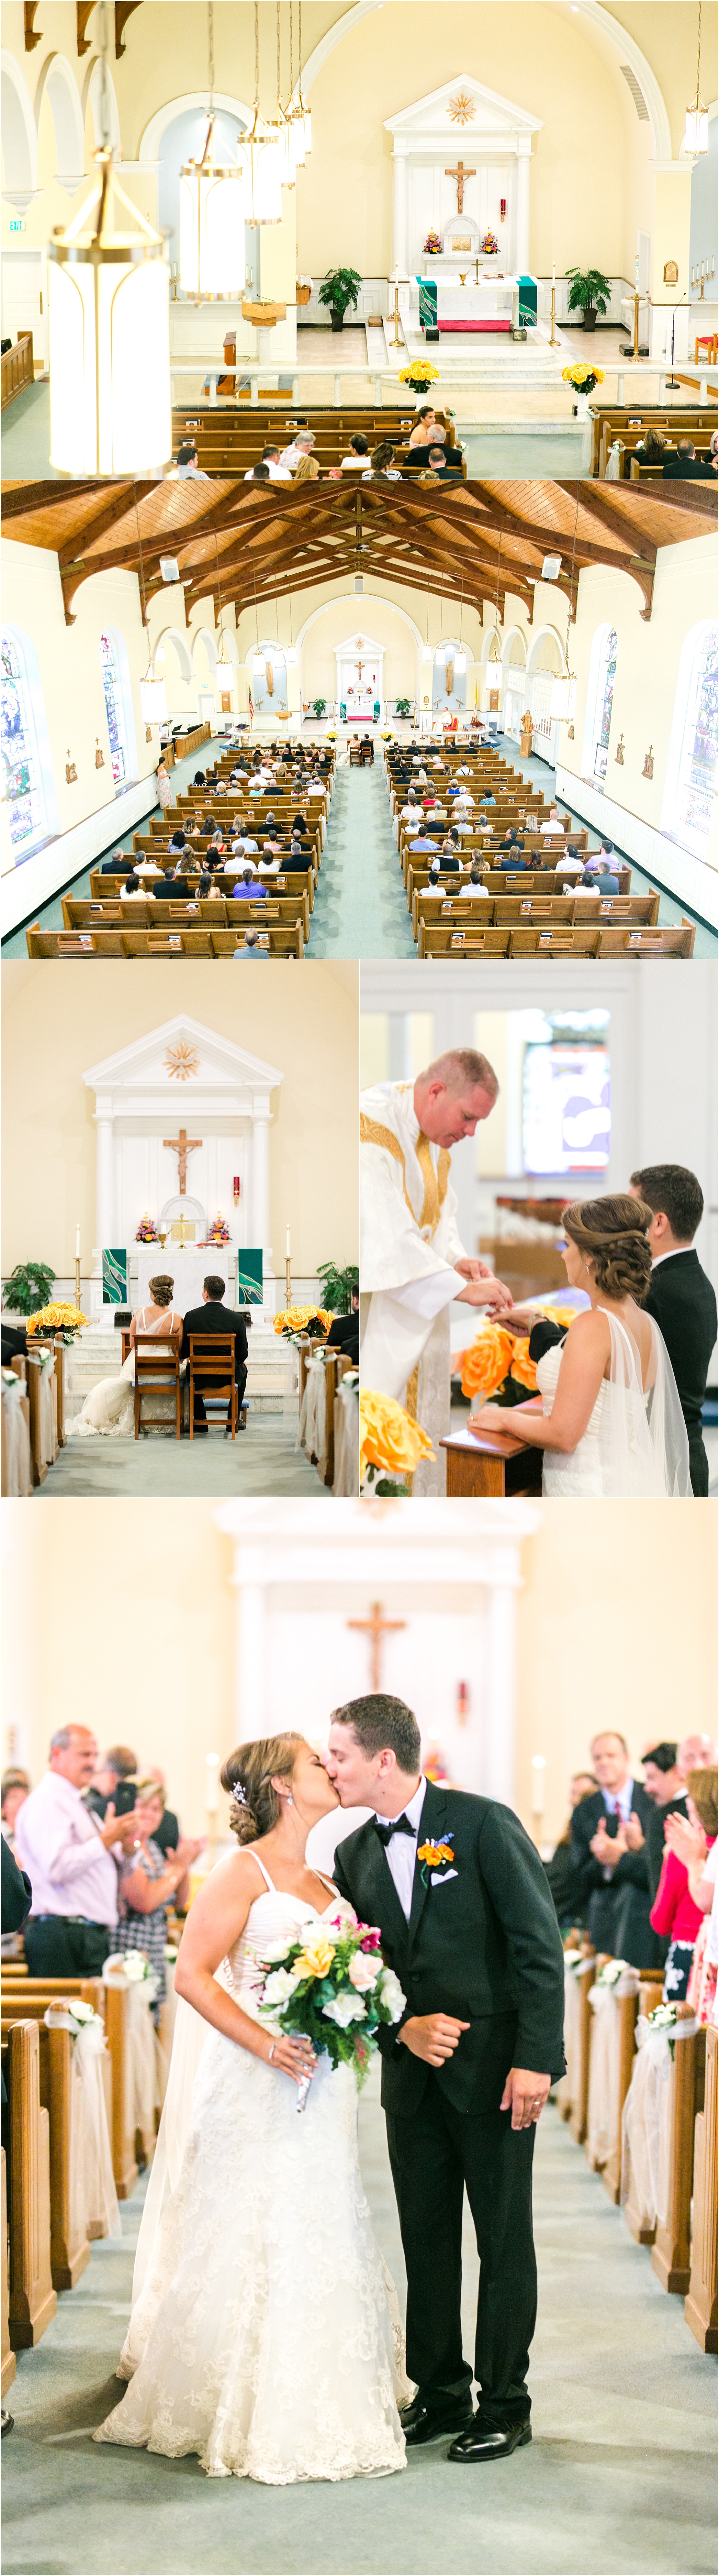 Costola-Photography-Maryland-wedding-olde-breton-inn